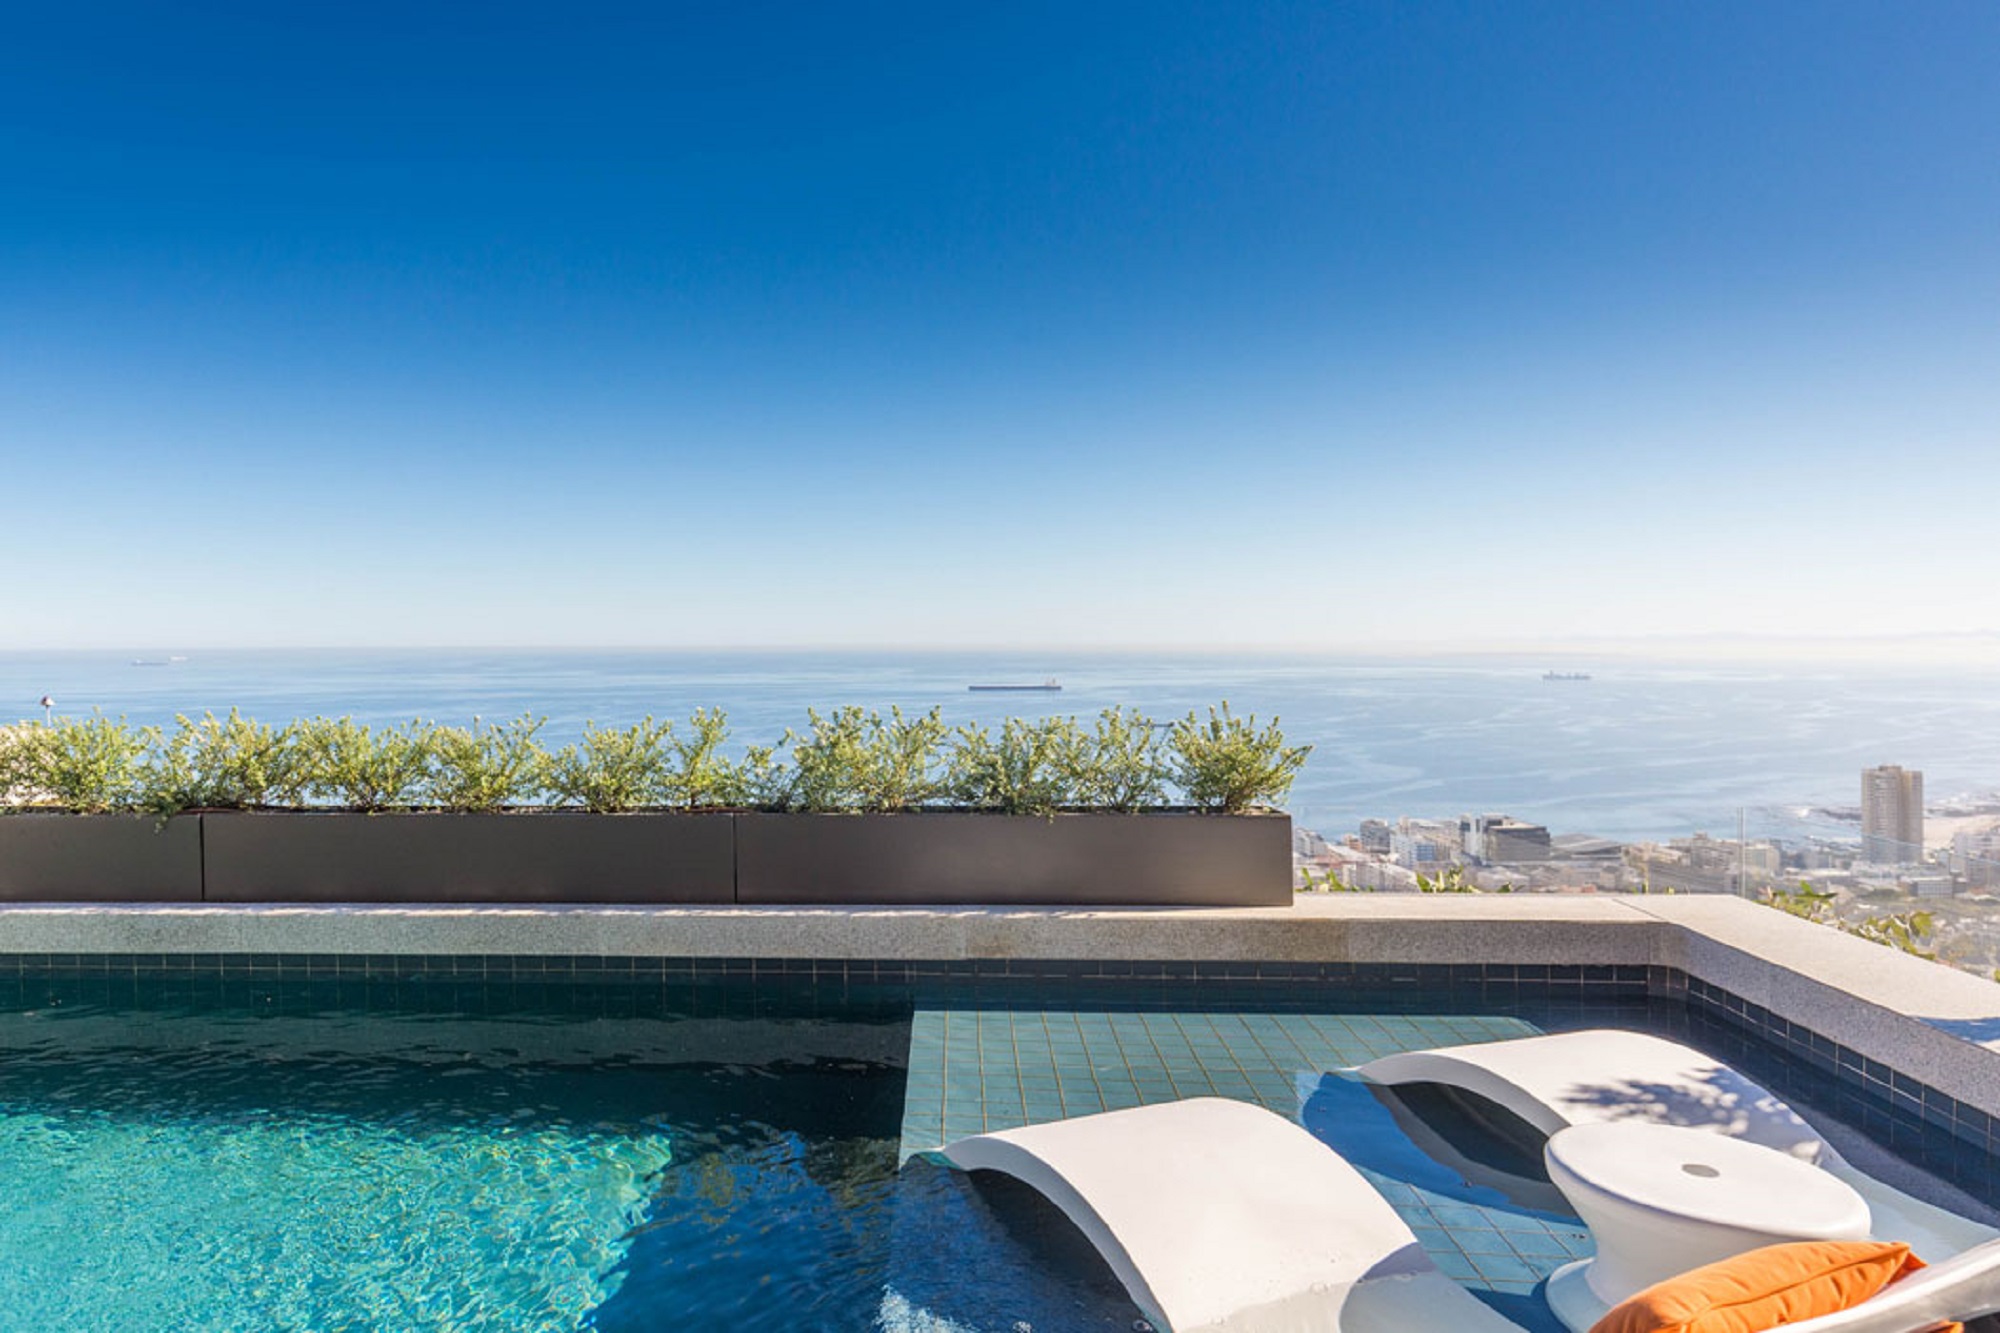 Sealion pool overlooking ocean